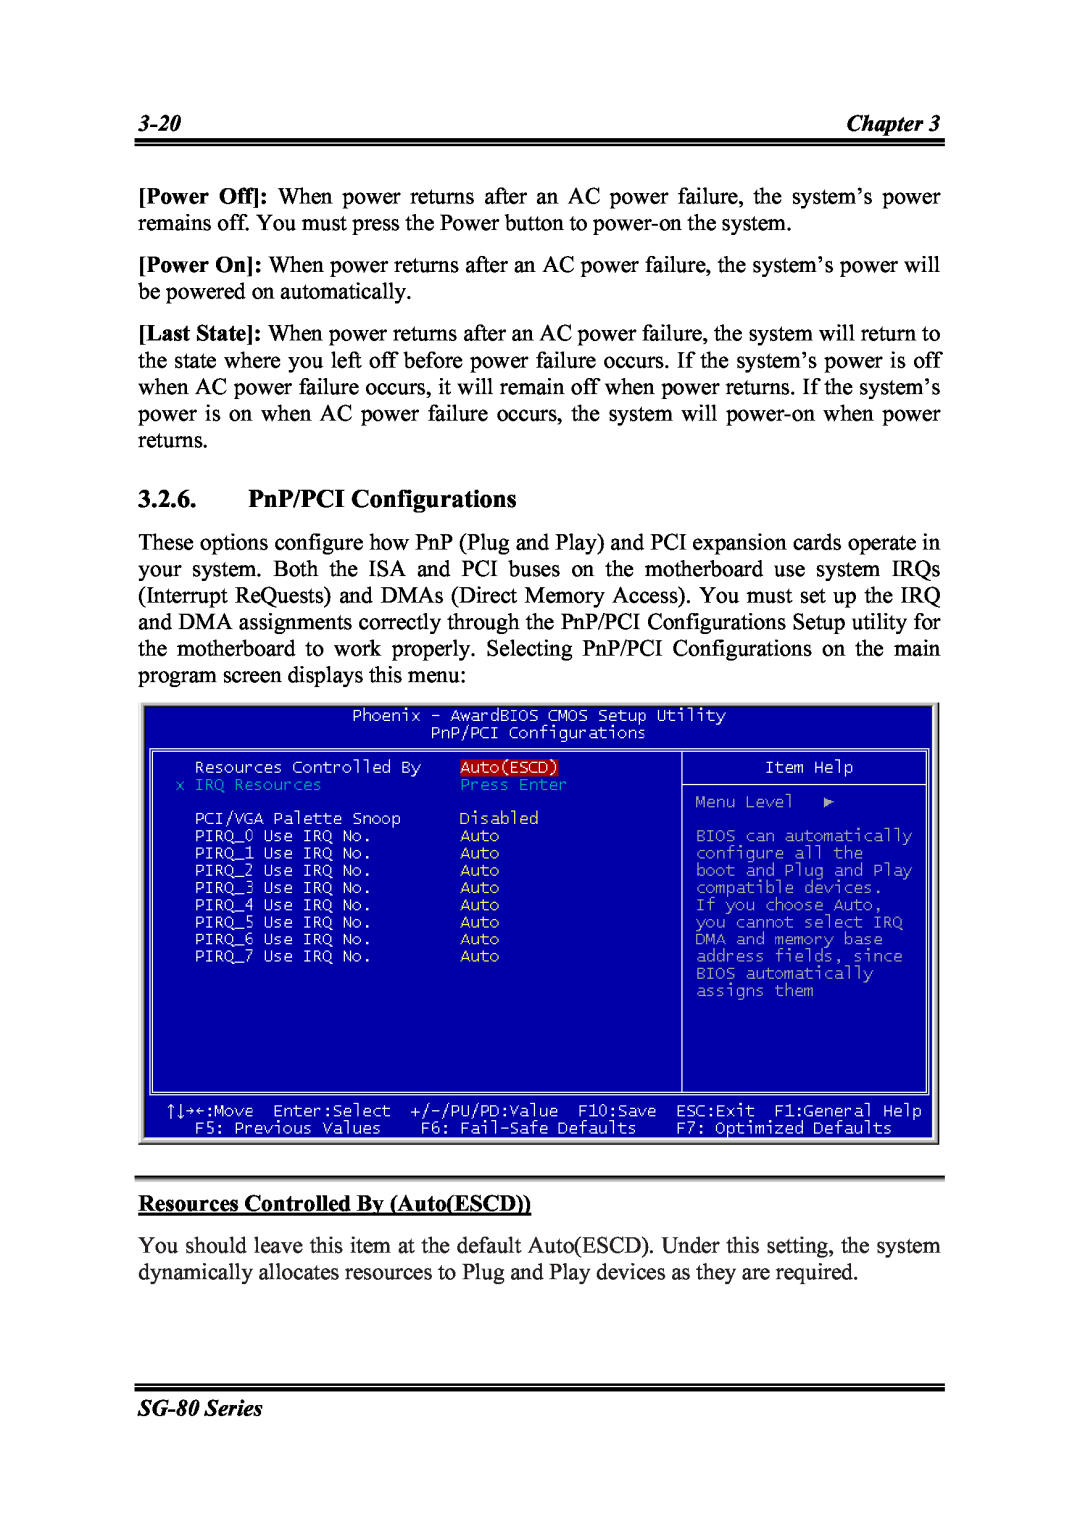 Intel SG-80, SG-81 user manual 3.2.6.PnP/PCI Configurations 